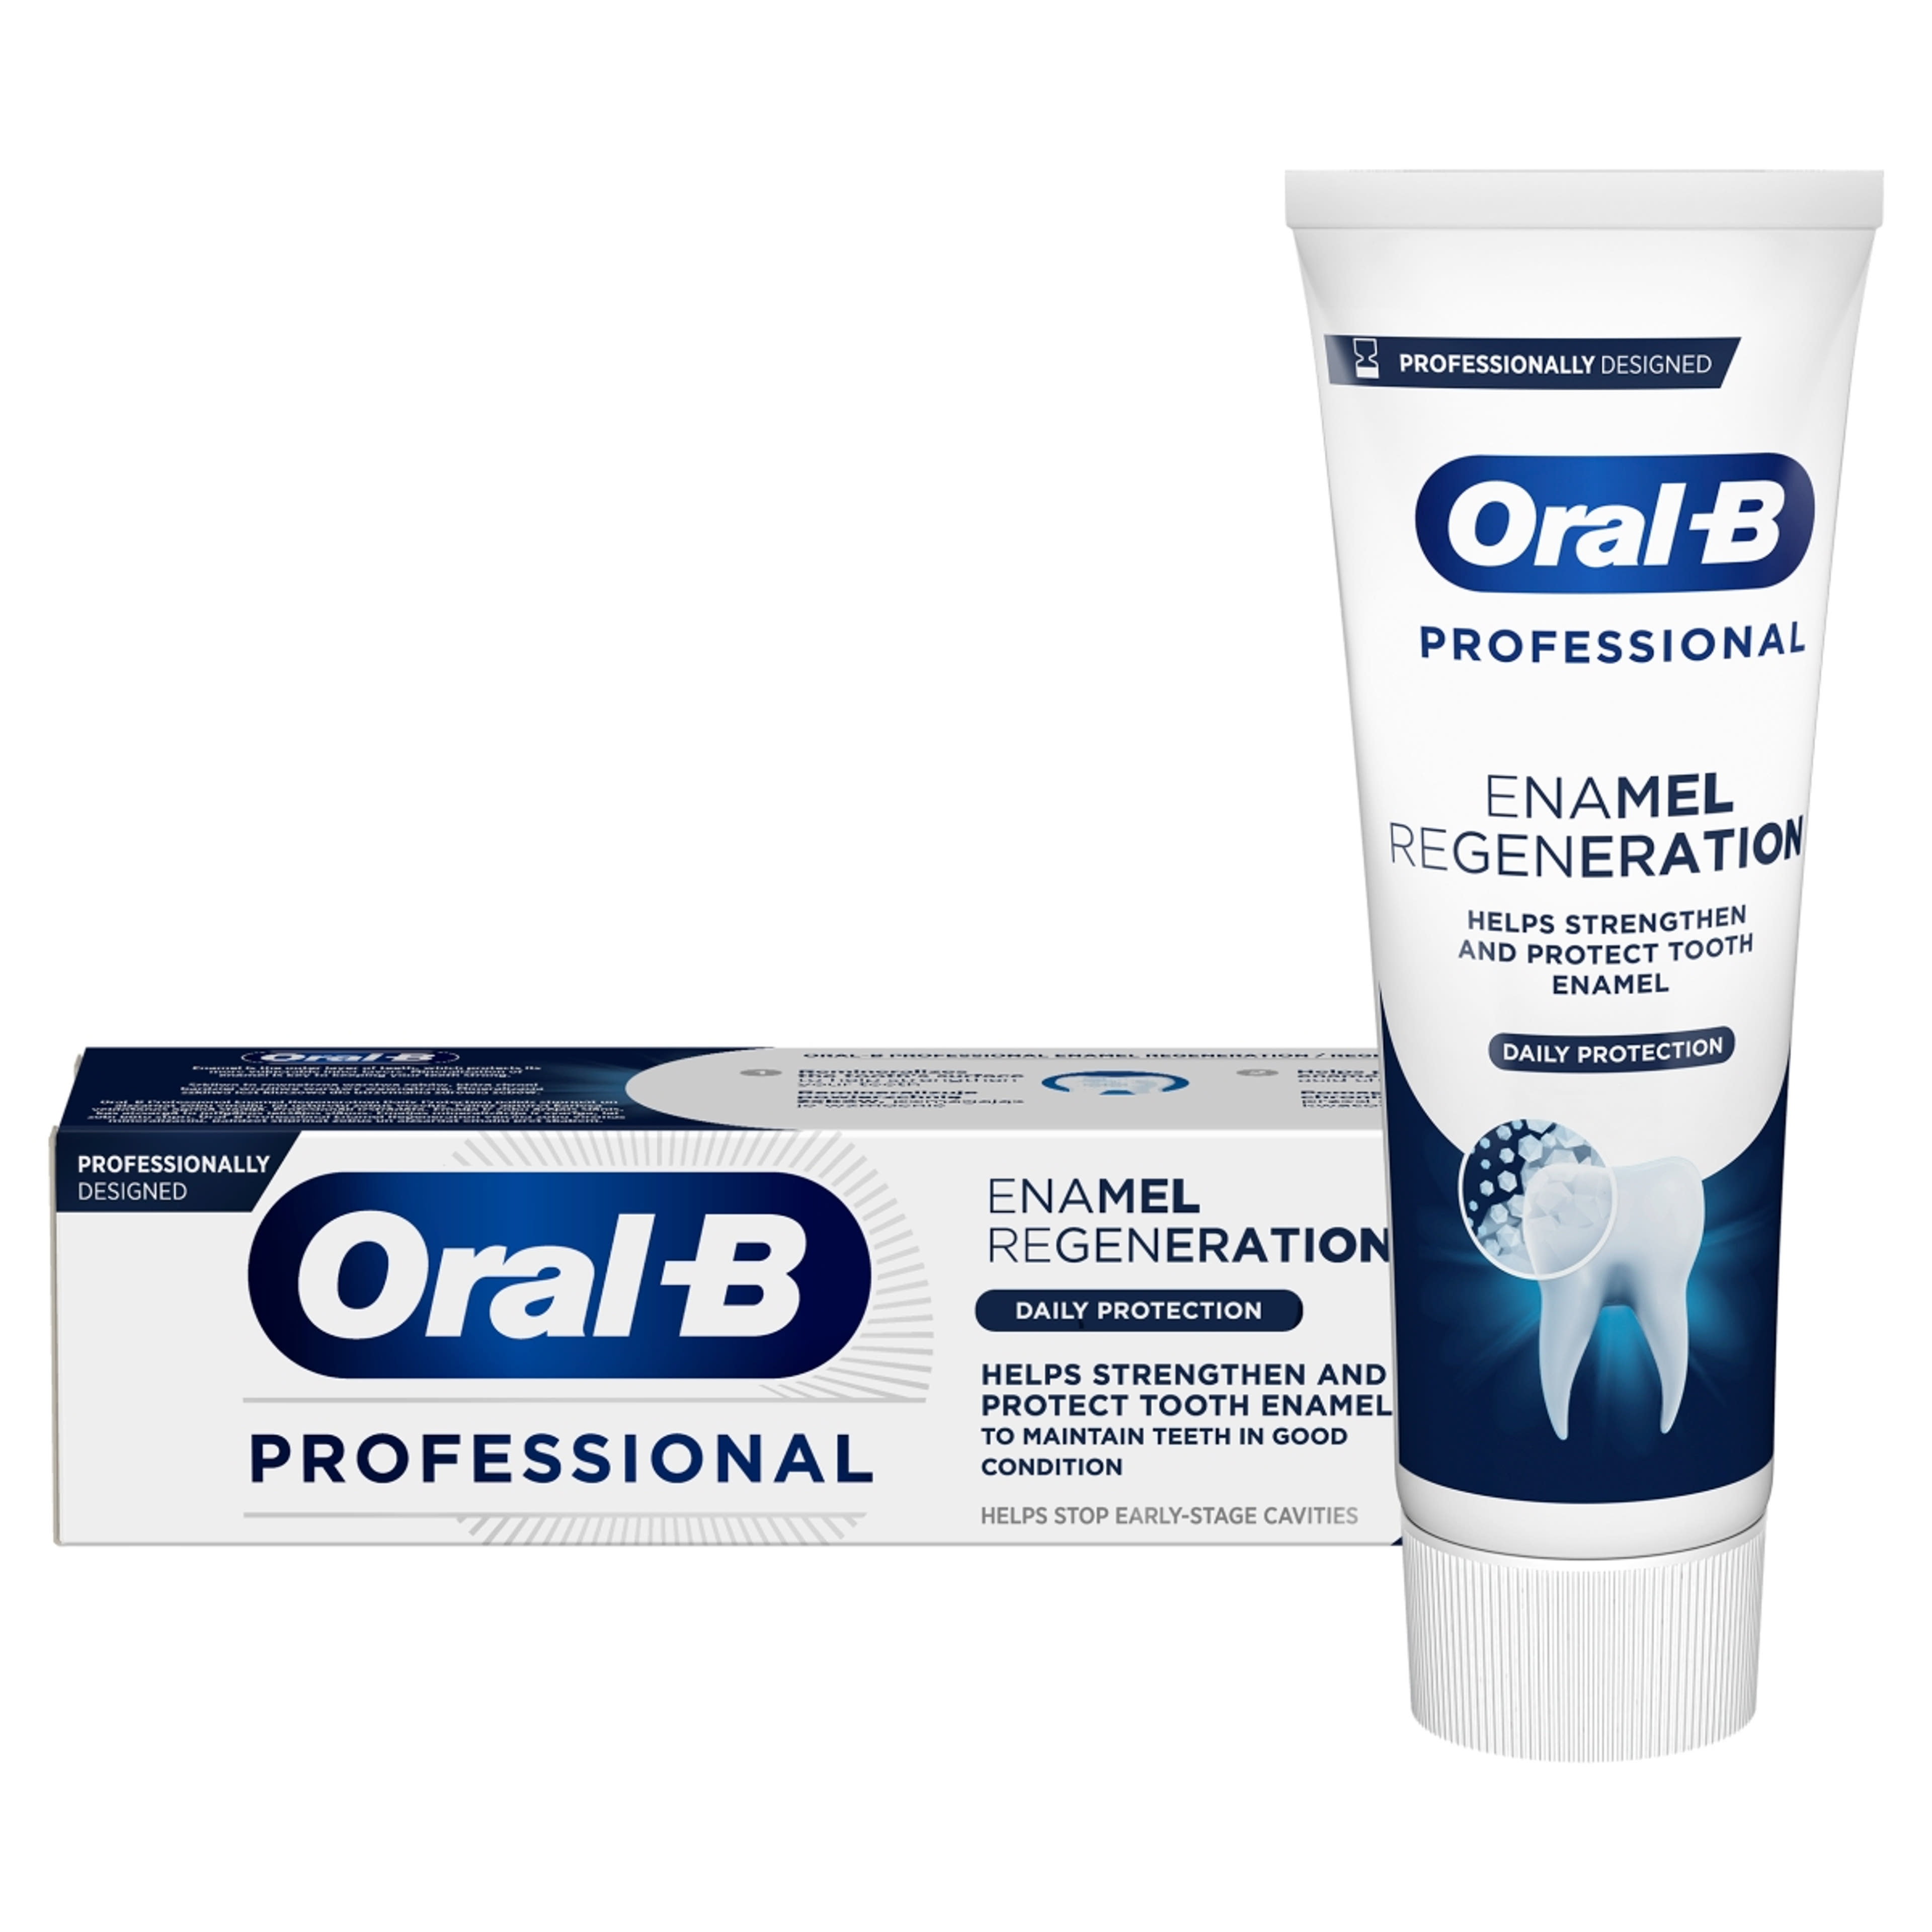 Oral-B Professional Regenerate Enamel Daily Protection fogkrém - 75 ml-2